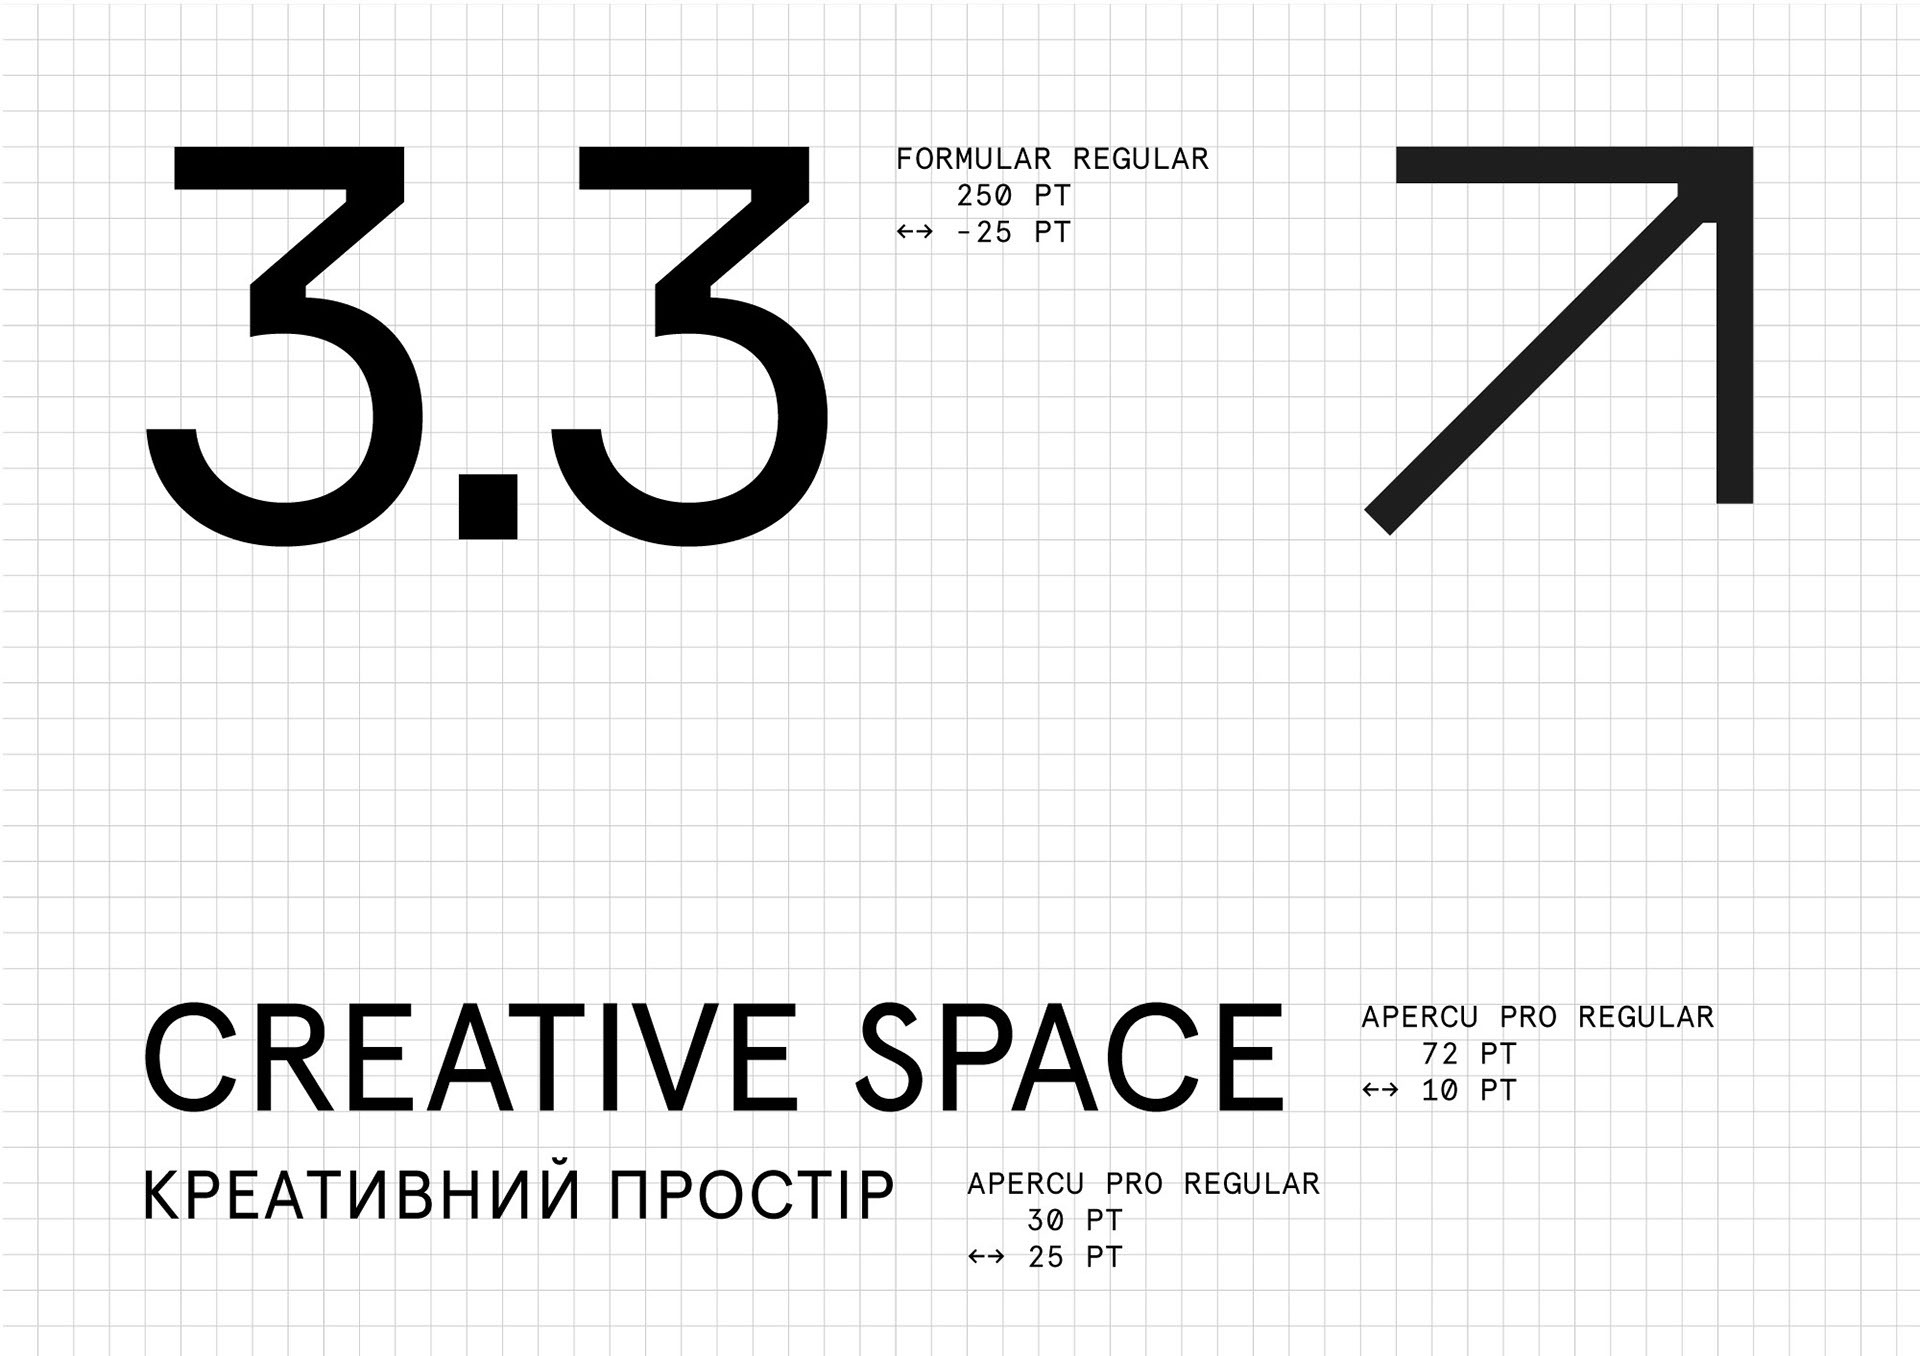 Art-zavod Platforma创意集群导视系统设计